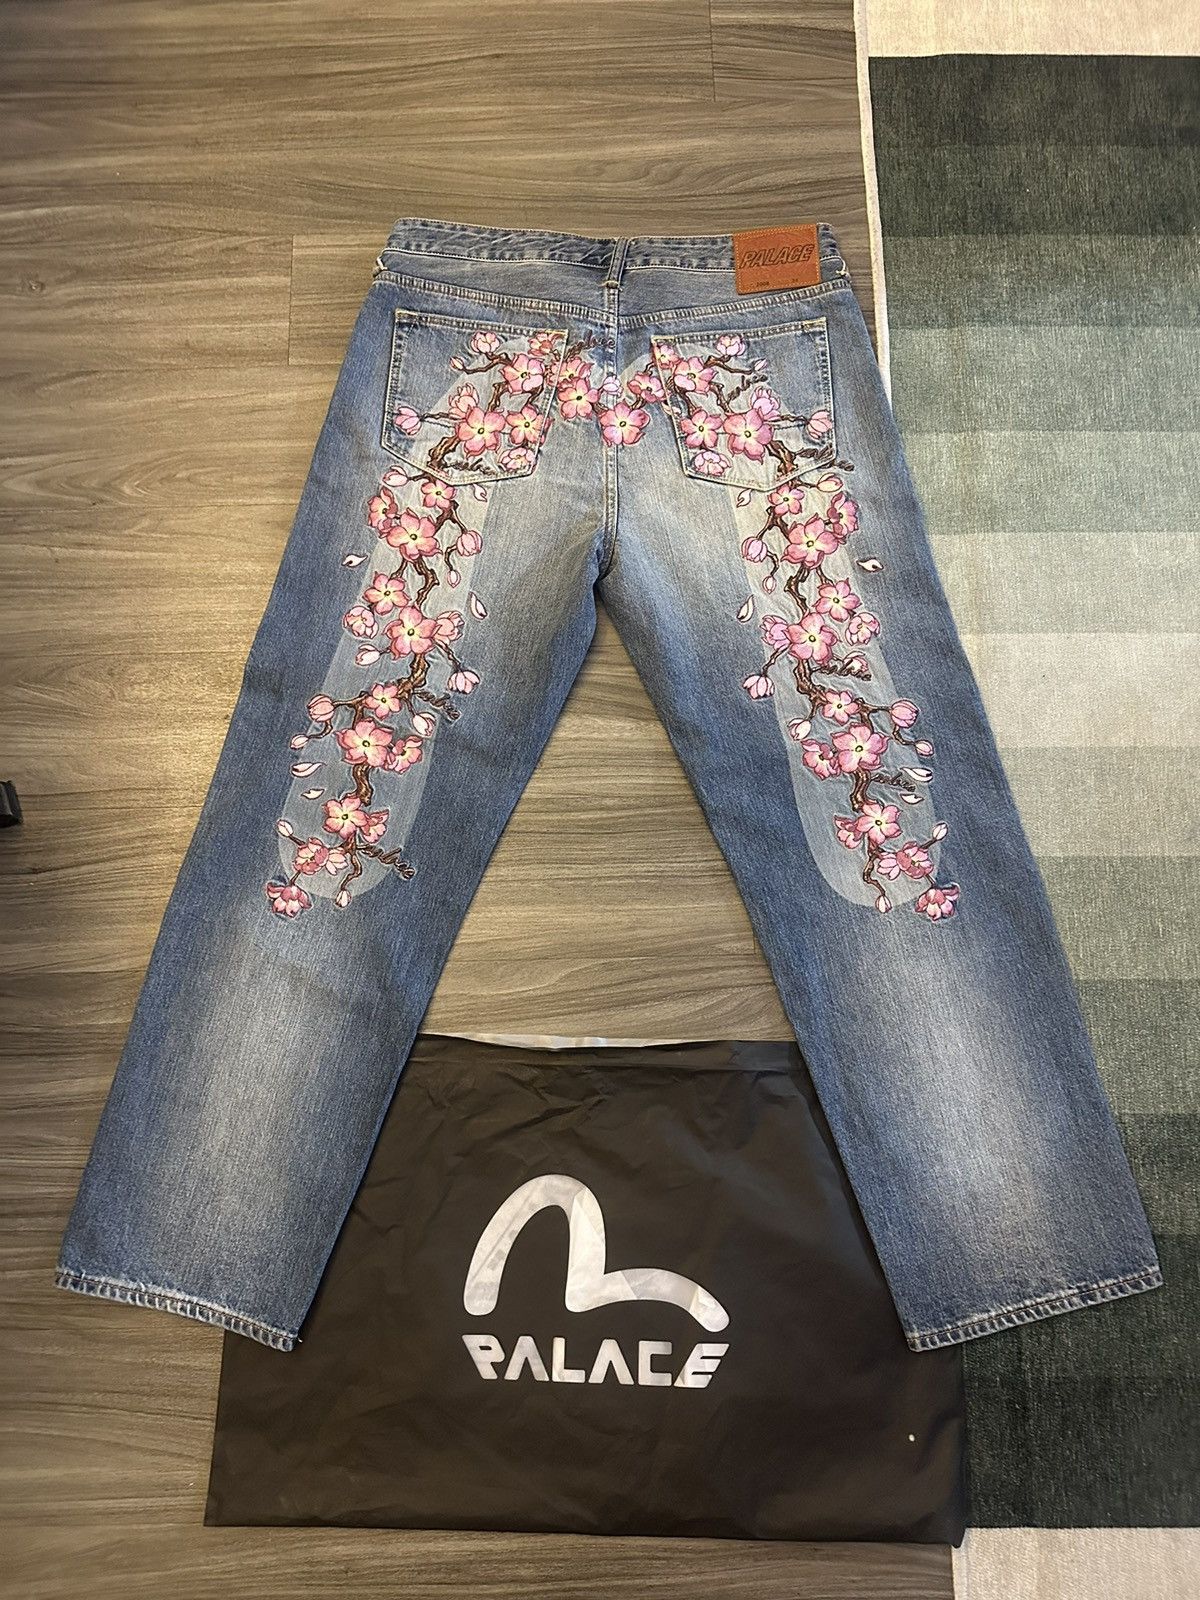 Palace Palace Evisu jeans | Grailed